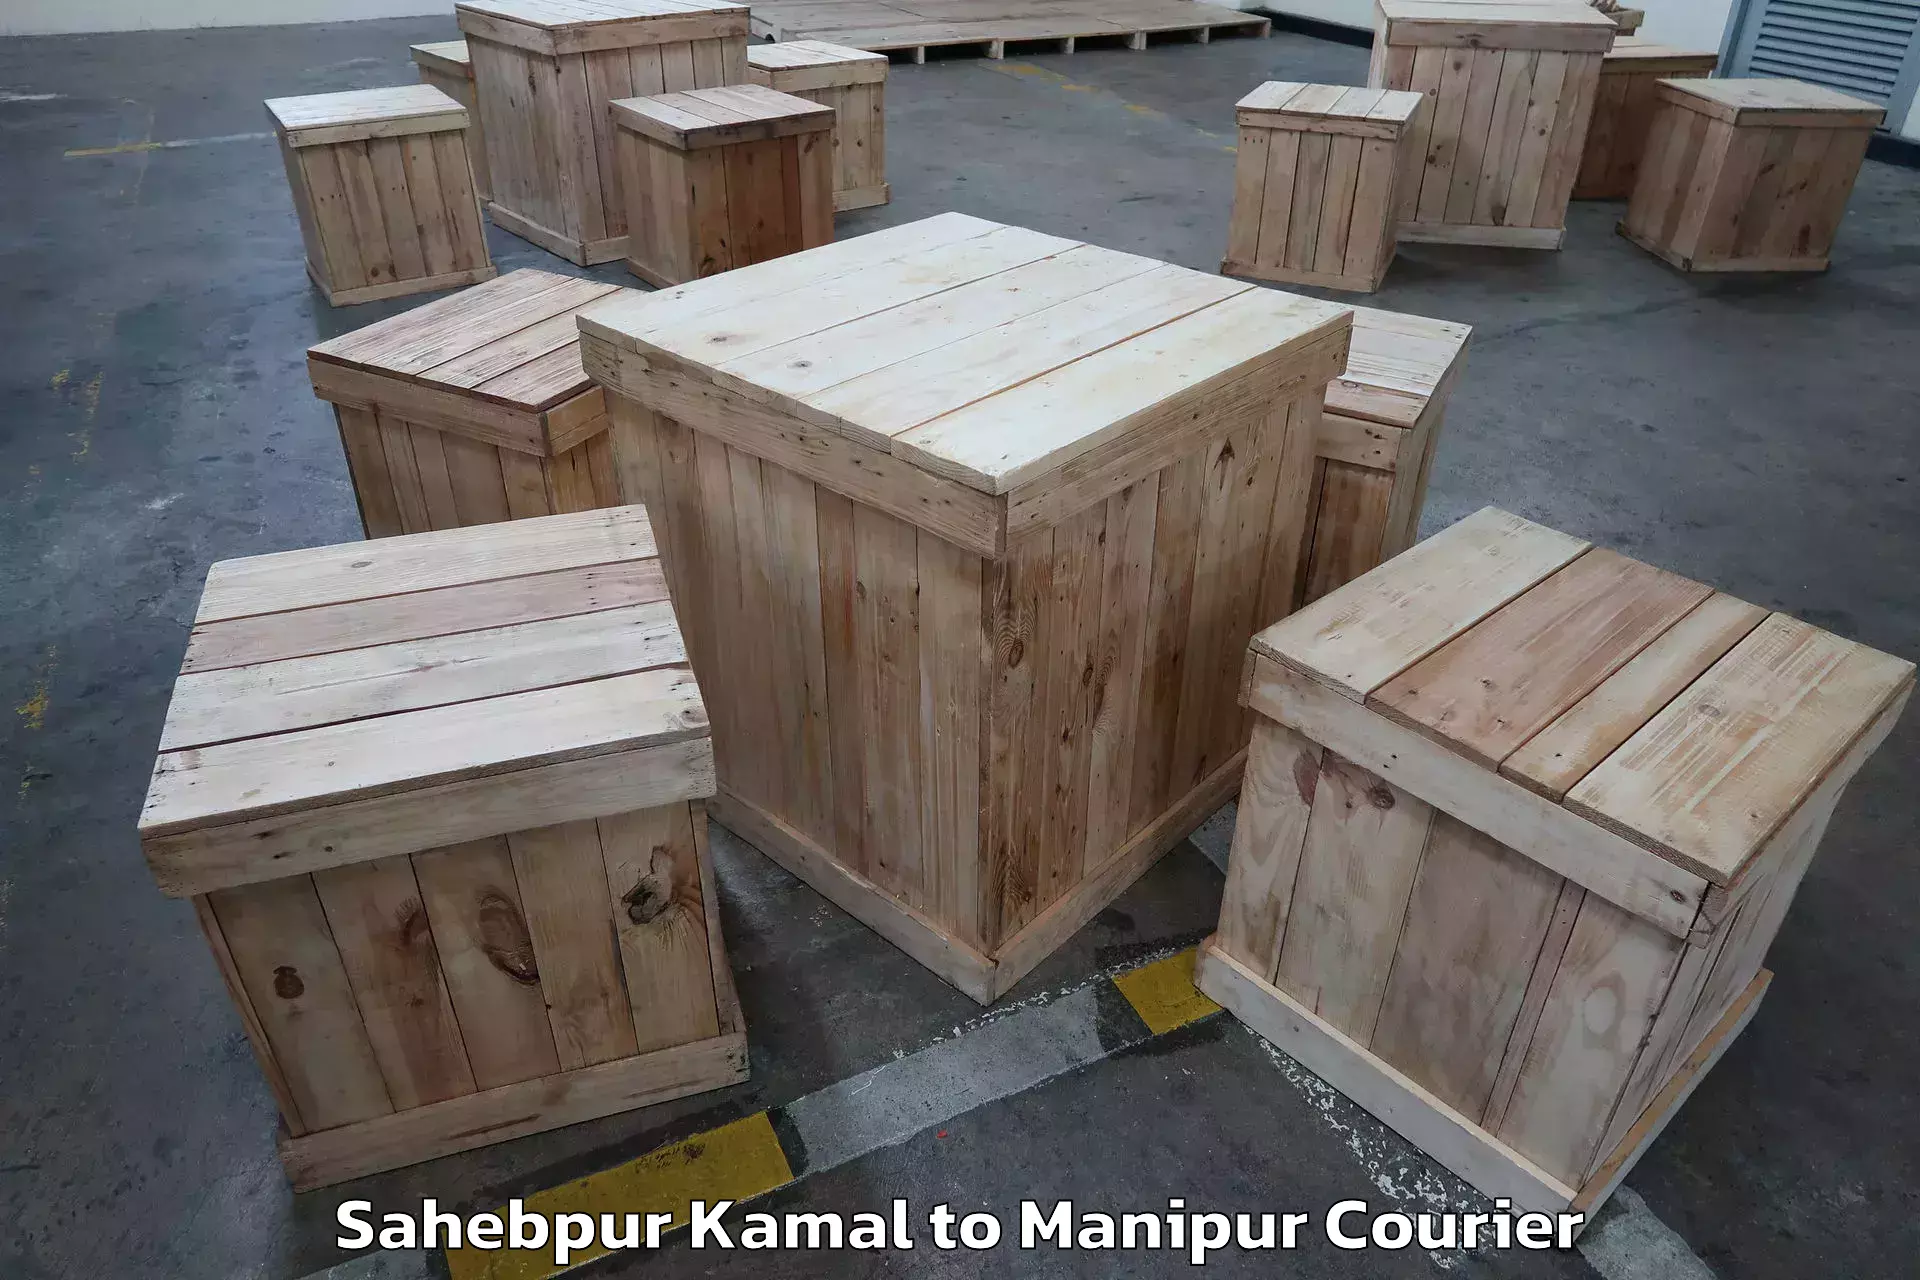 Full-service movers Sahebpur Kamal to Manipur